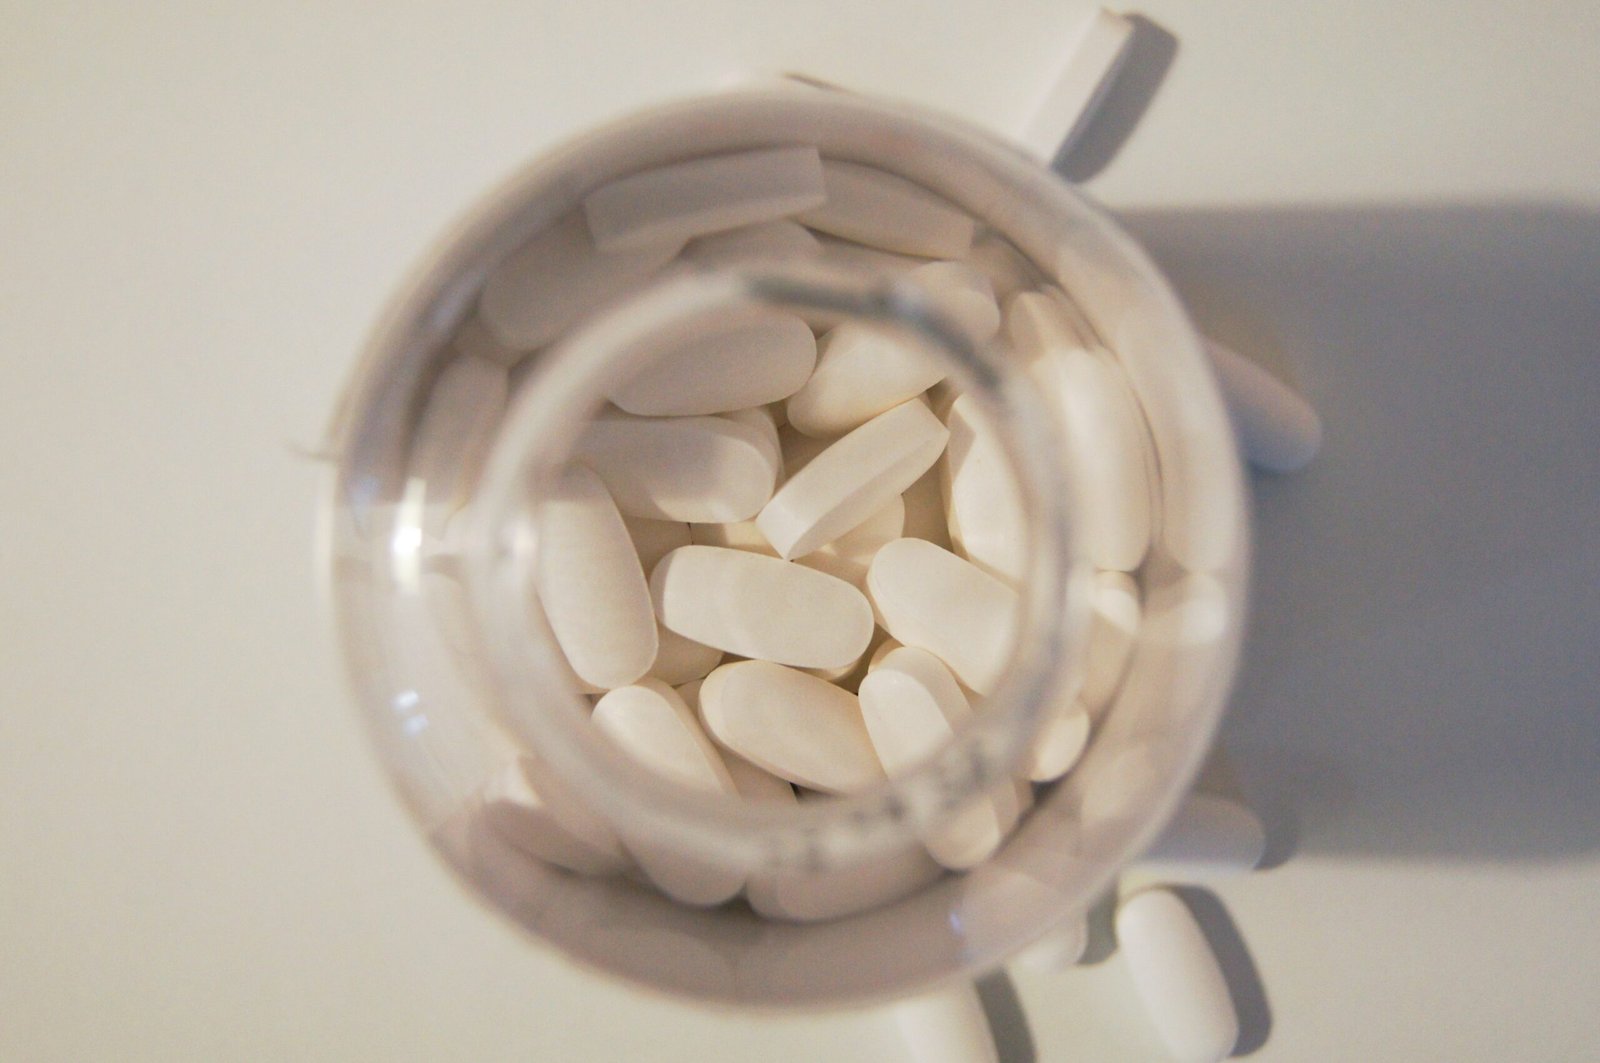 Homemade rooting hormone Aspirin